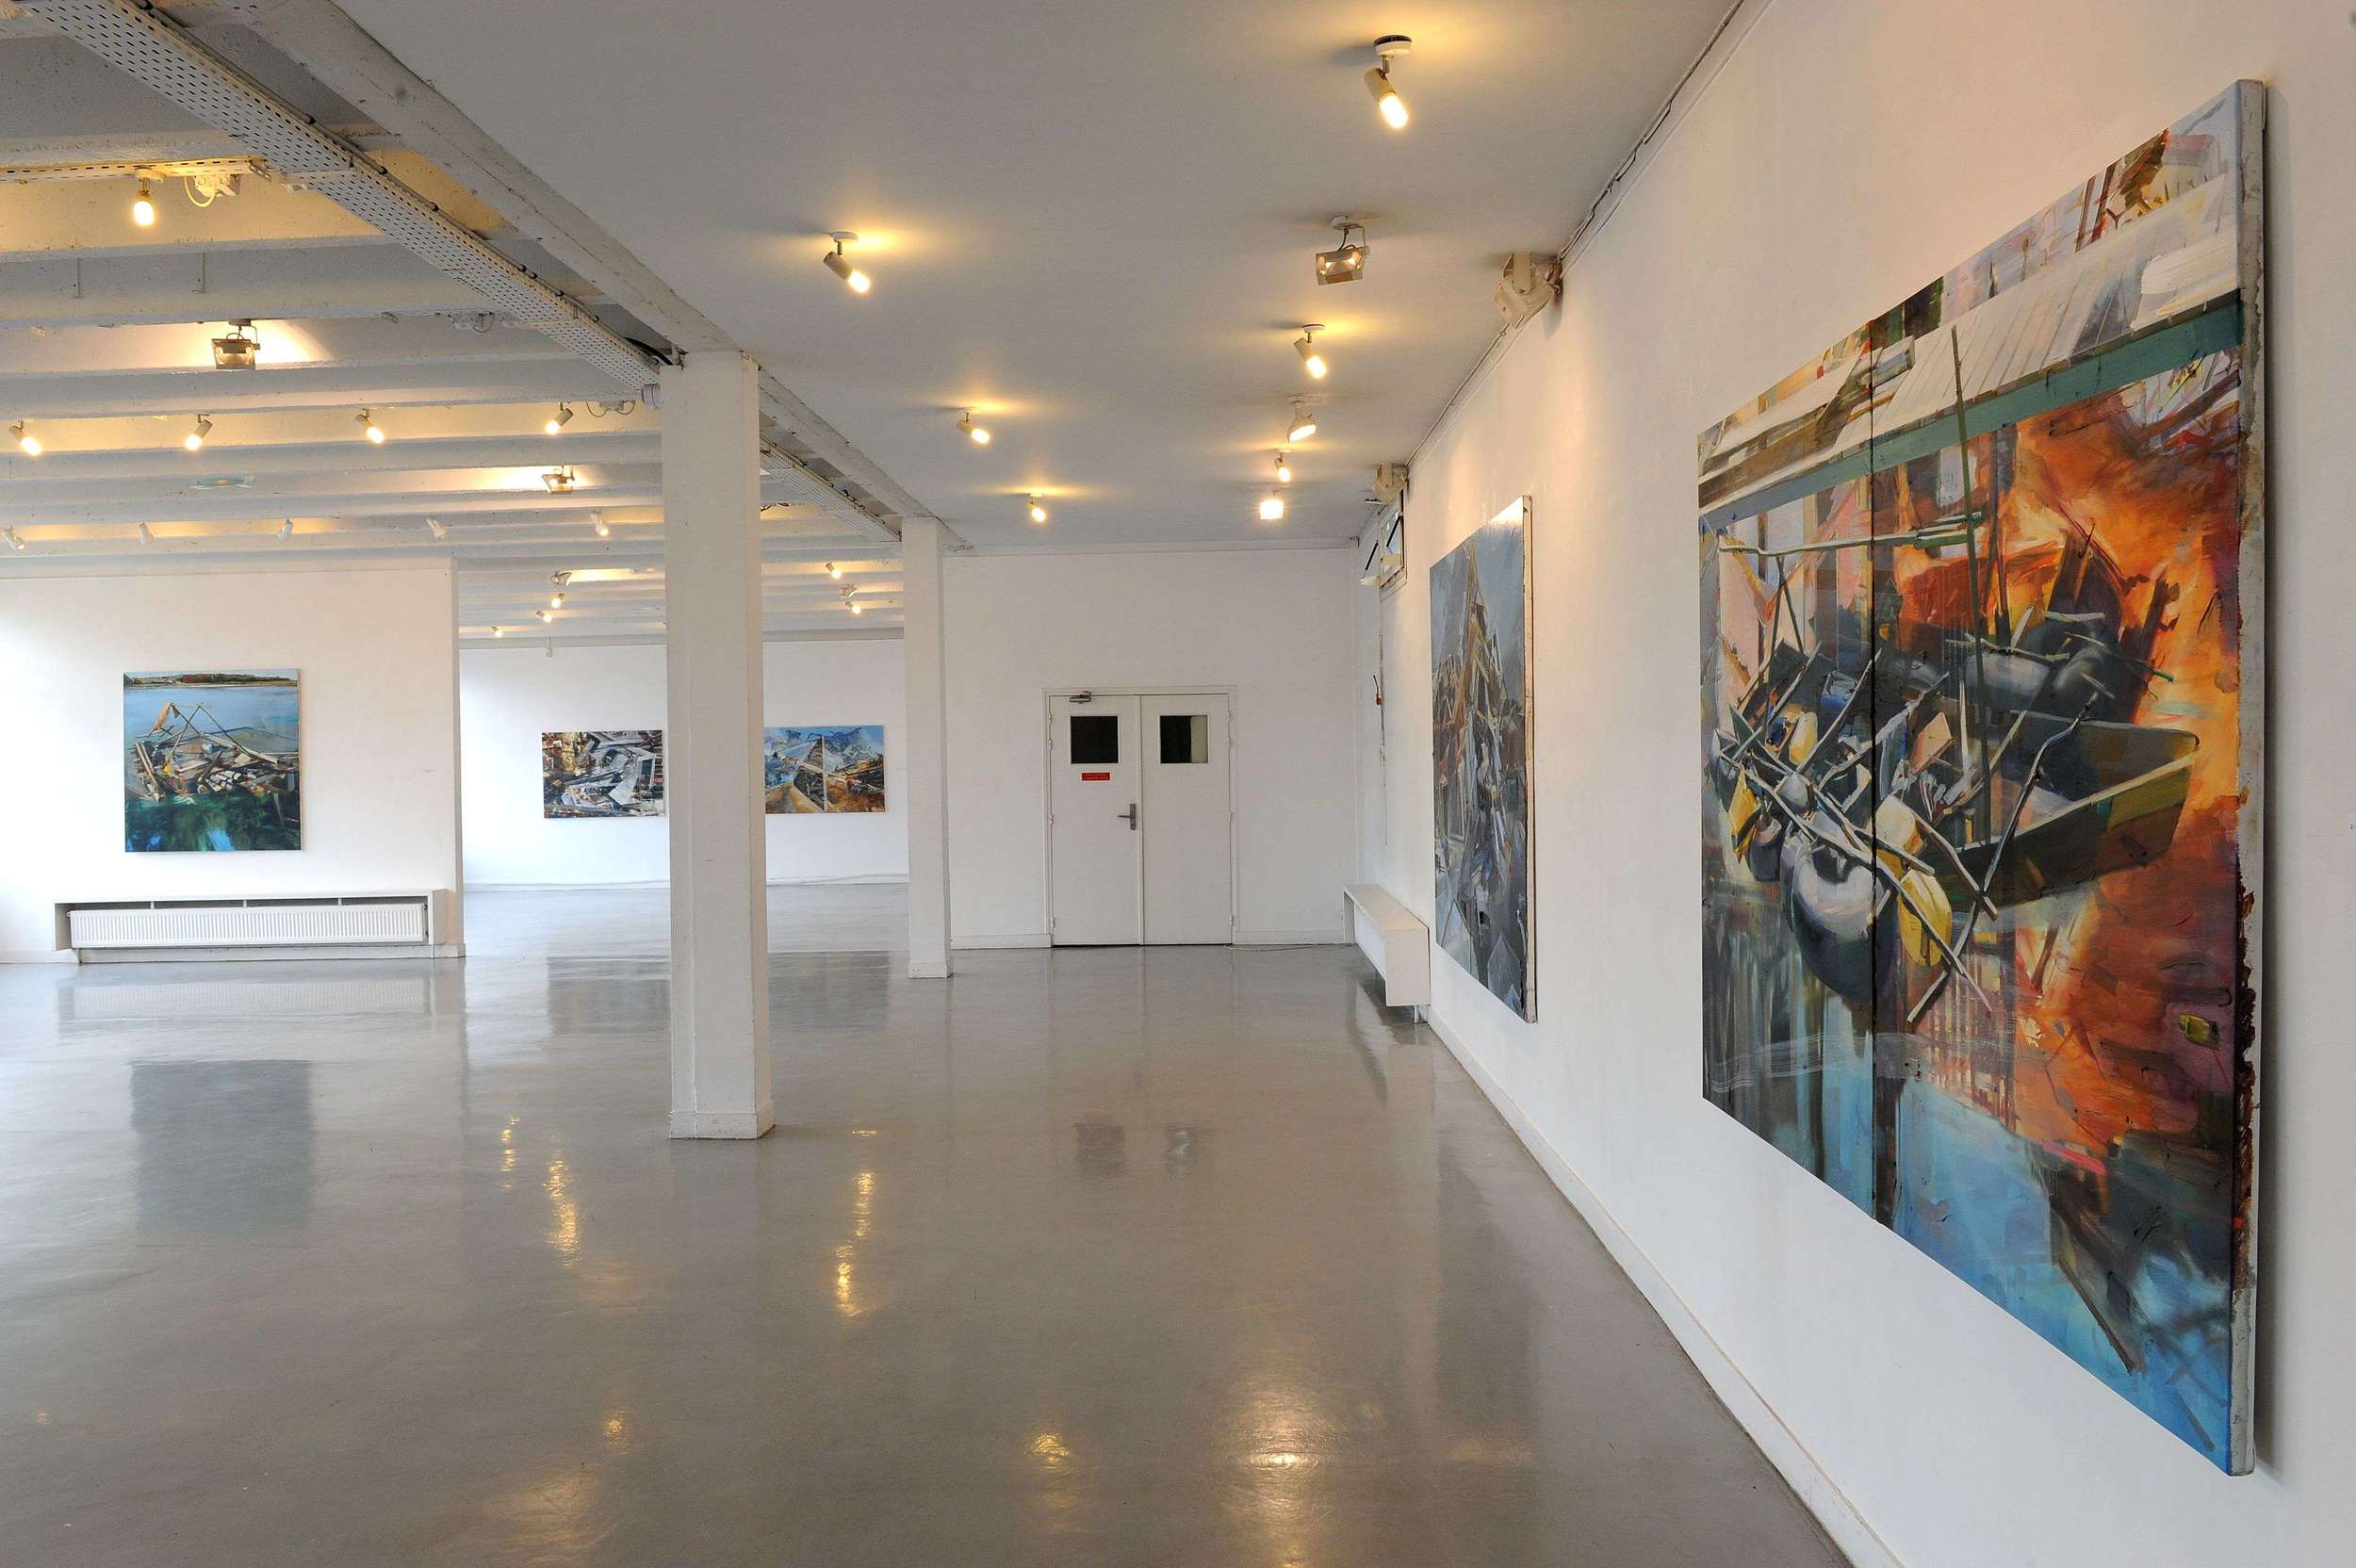   Shake Break Bounce ,&nbsp;Julio Gonzales Gallery, and Maison Marin Beaux-Arts,&nbsp;Arcueil (FR) 2012    